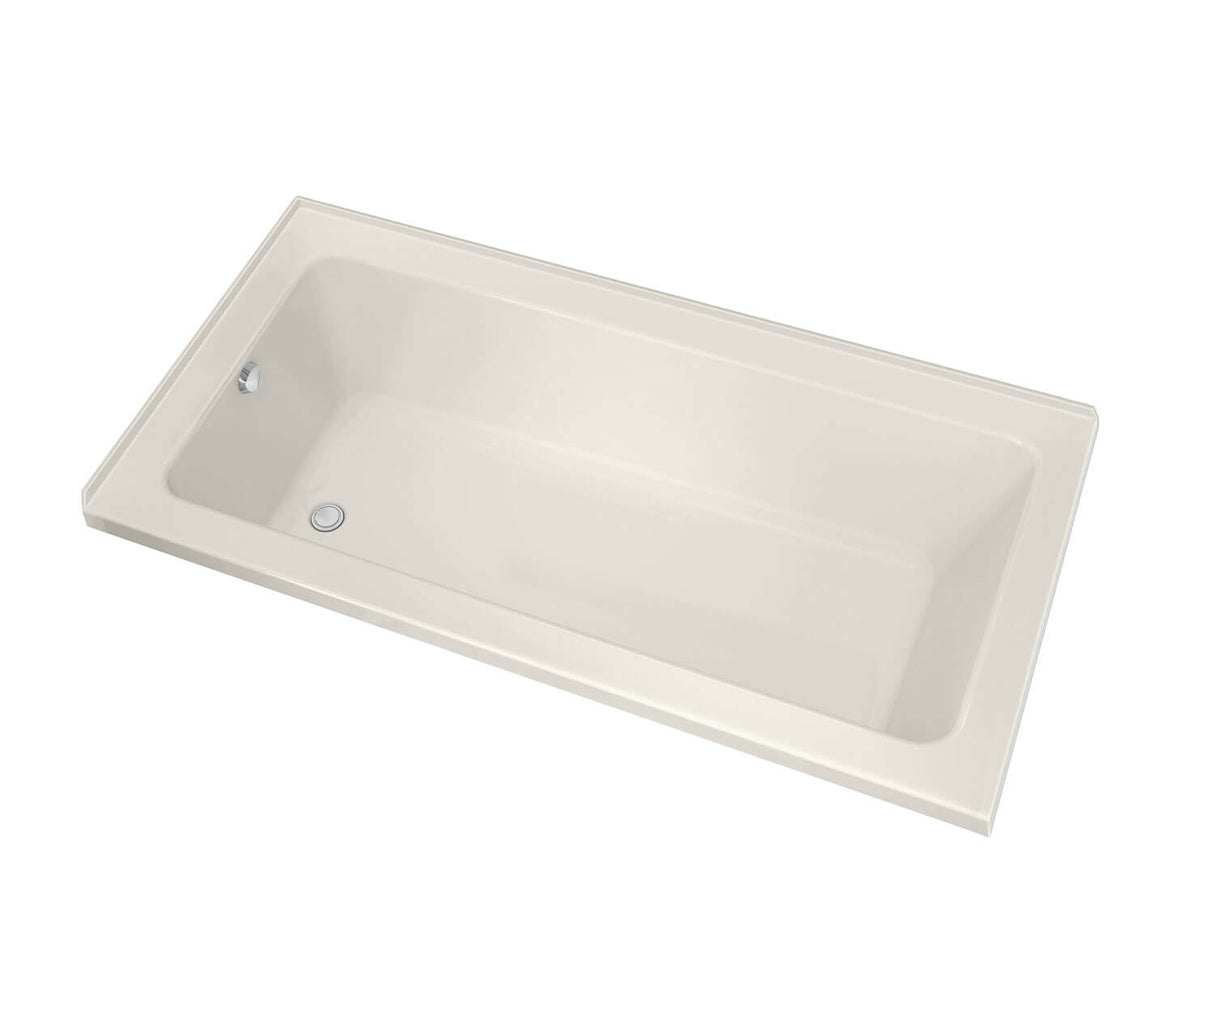 MAAX 106211-L-097-007 Pose 7236 IF Acrylic Corner Left Left-Hand Drain Combined Whirlpool & Aeroeffect Bathtub in Biscuit